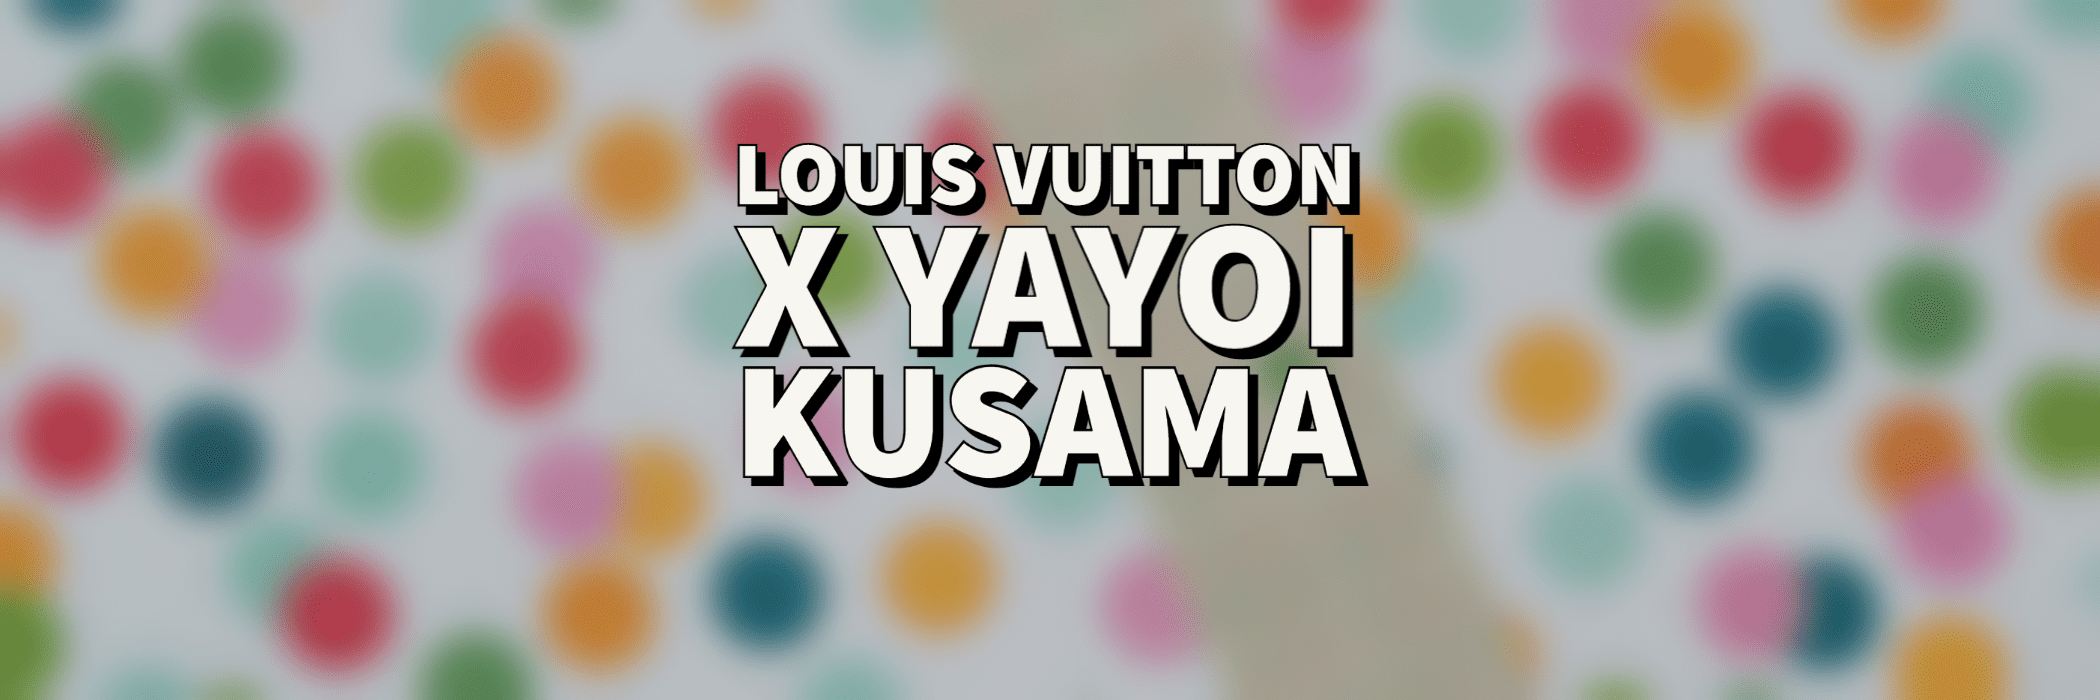 The Louis Vuitton x Yayoi Kusama pop-up in Harajuku looks like an